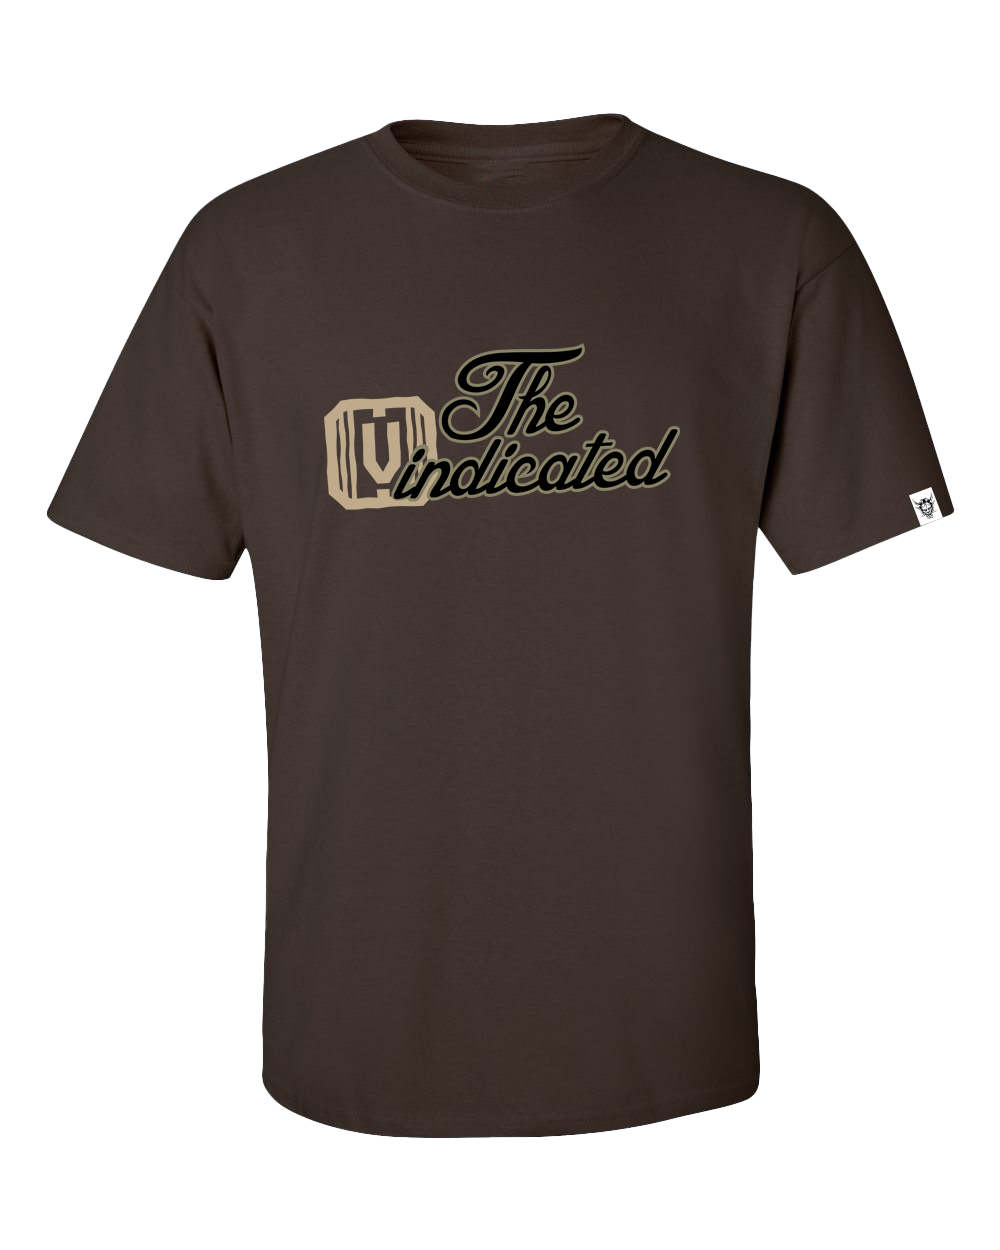 "The Vindicated" Brown Unisex Tee